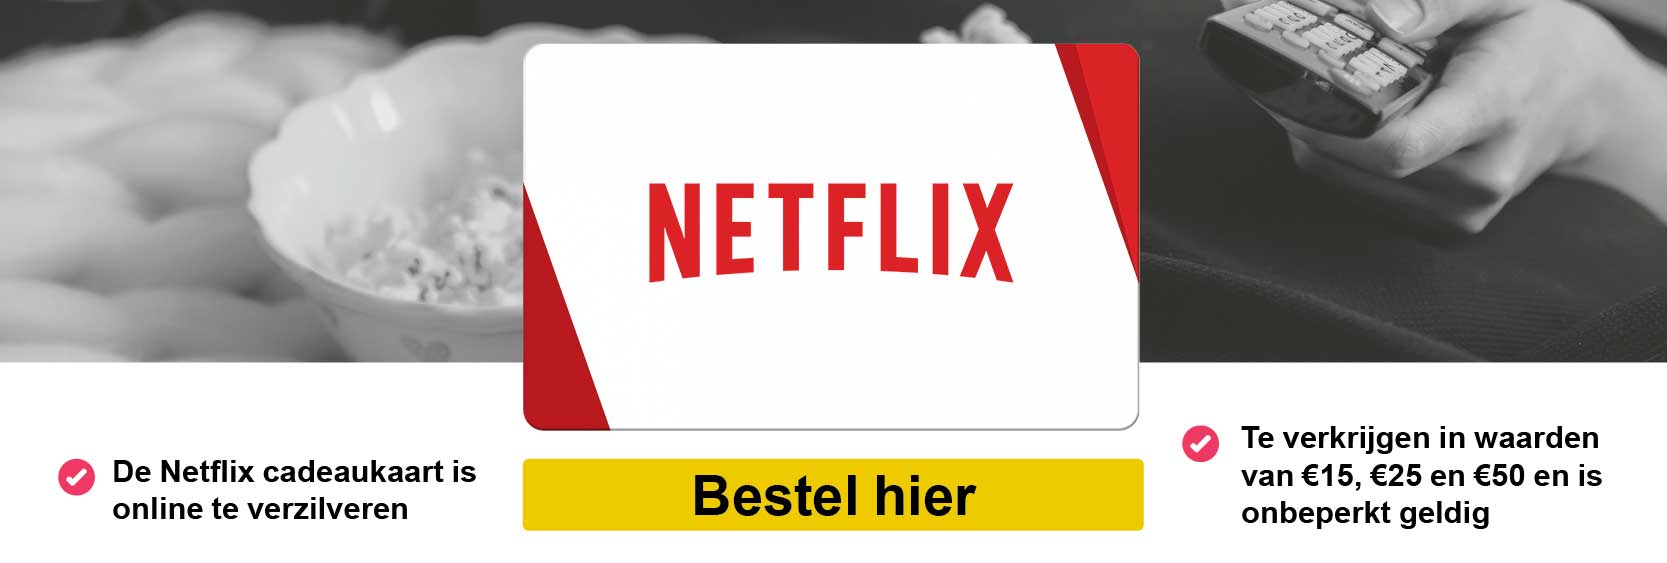 Netflix_banner_def